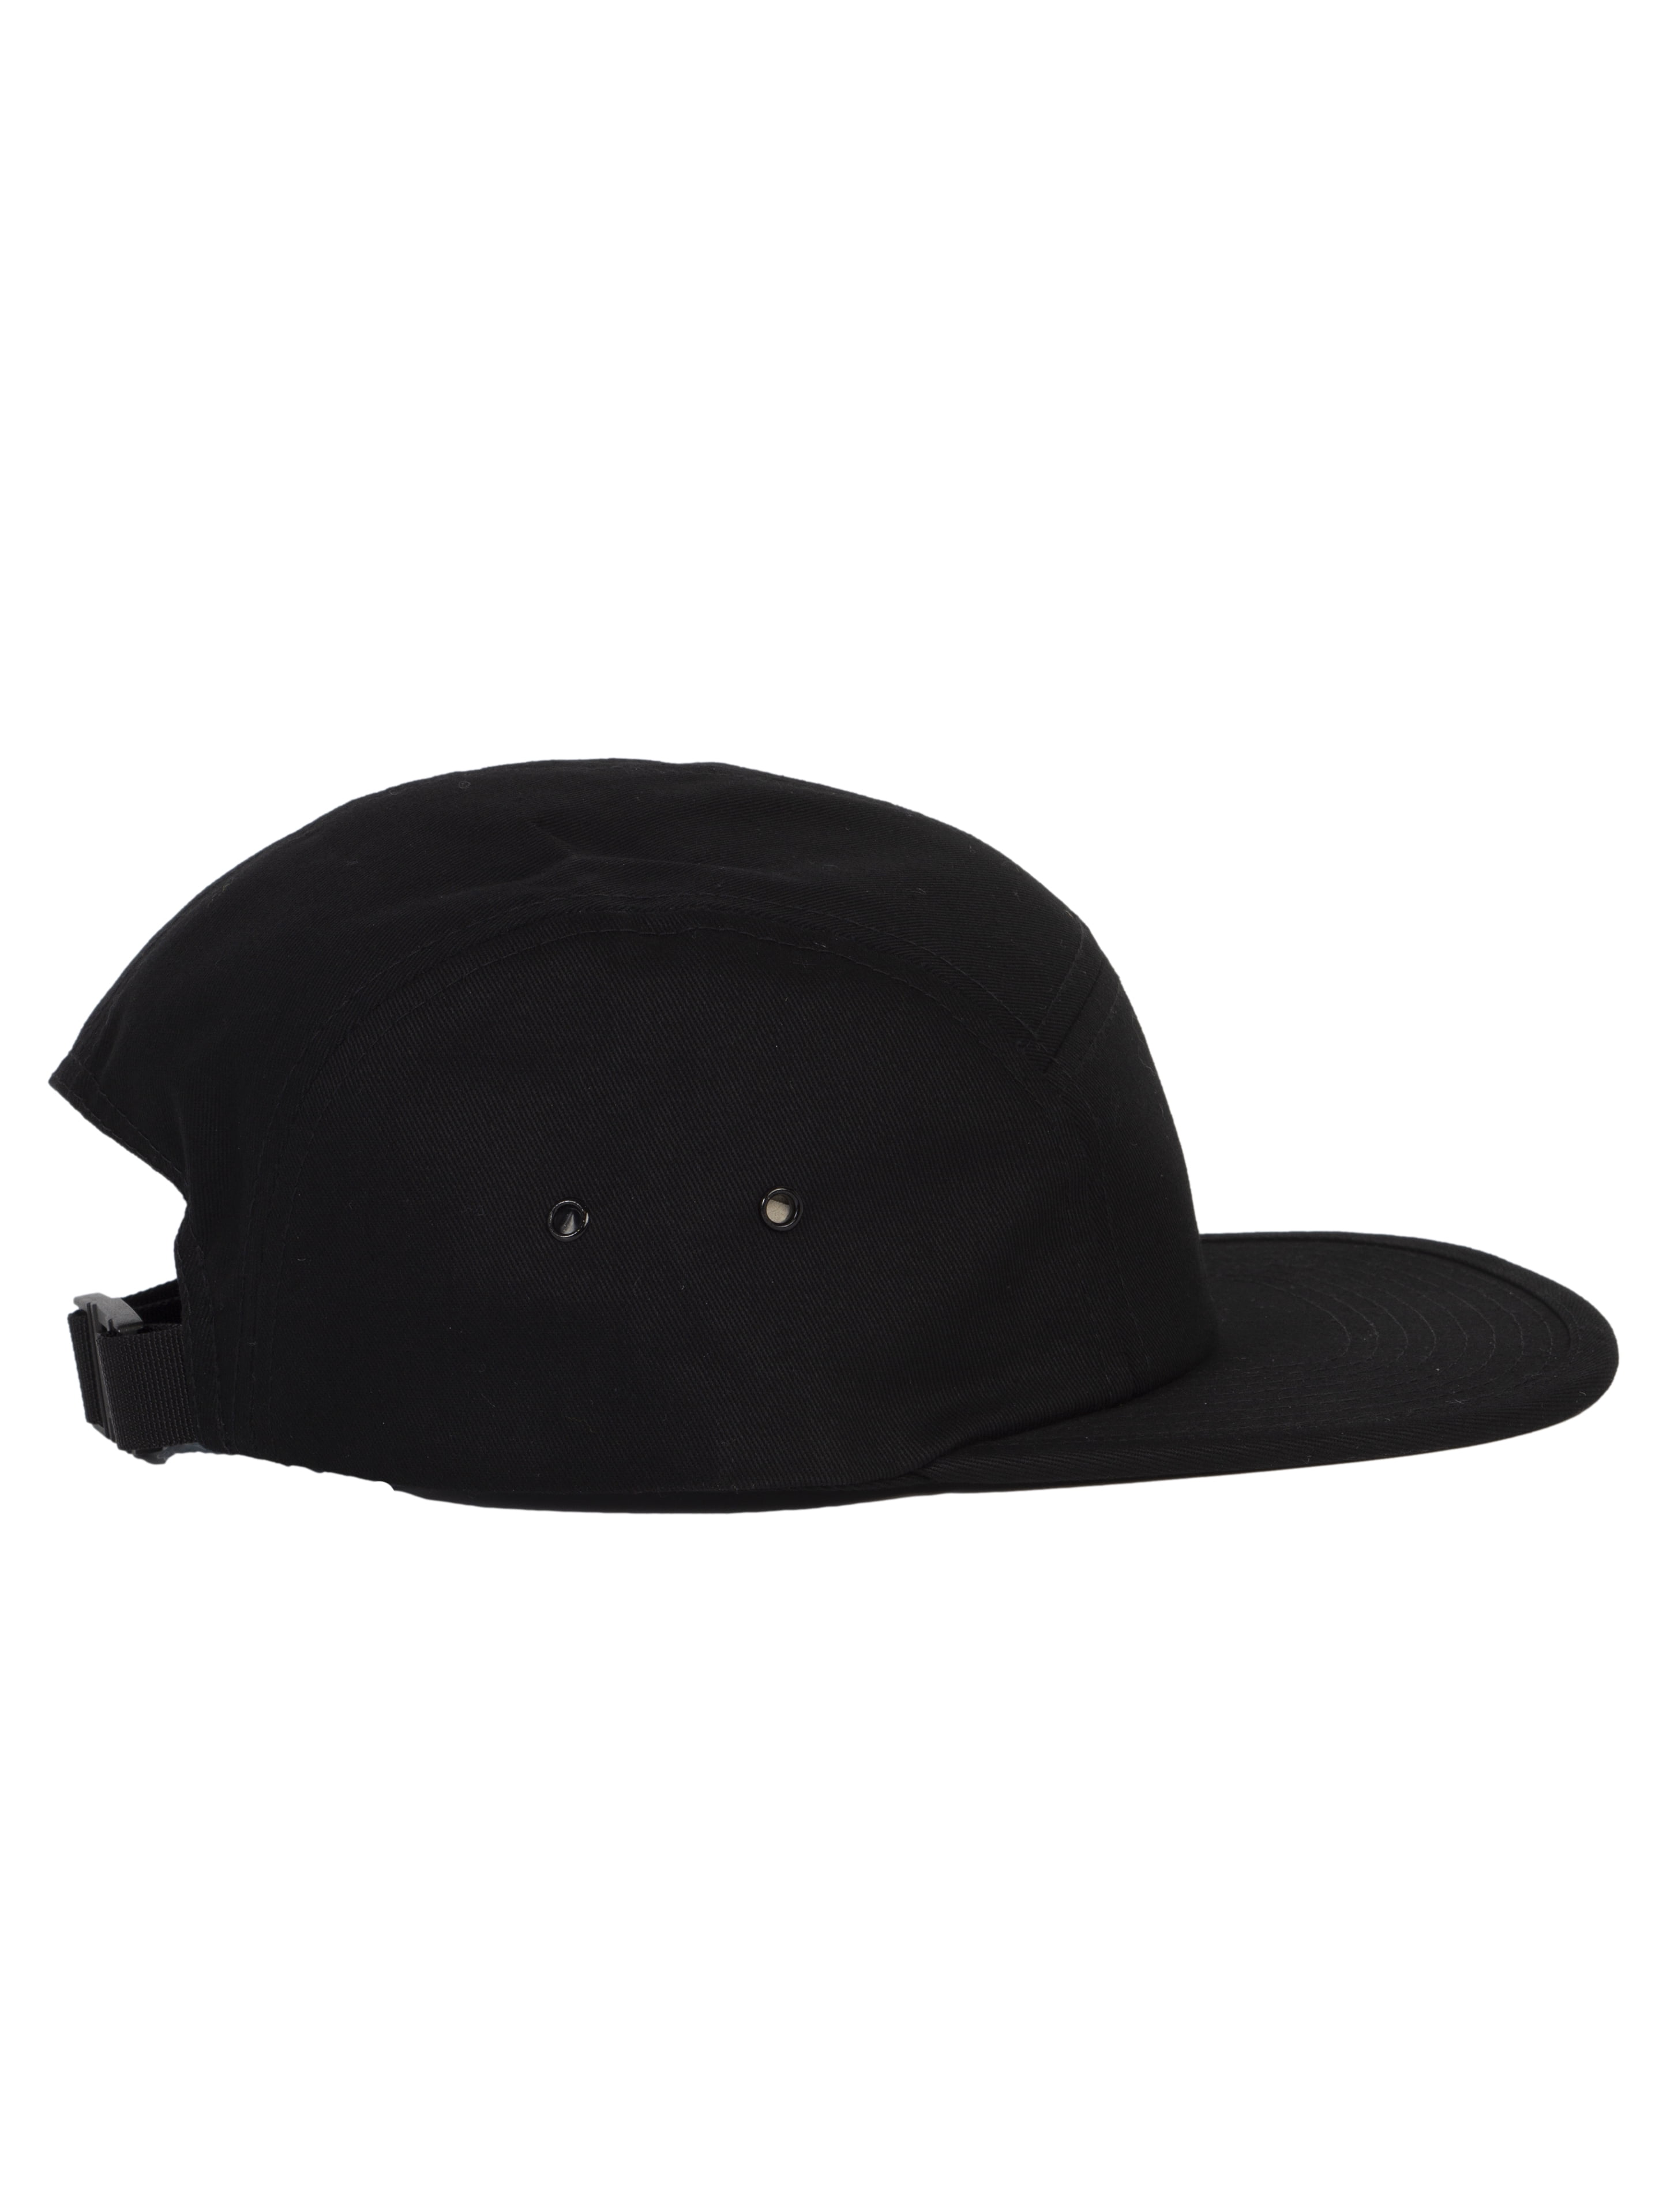 Top Headwear 5 Black Bill Hat For Classic Jockey Men Baseball Panel Flat Cap